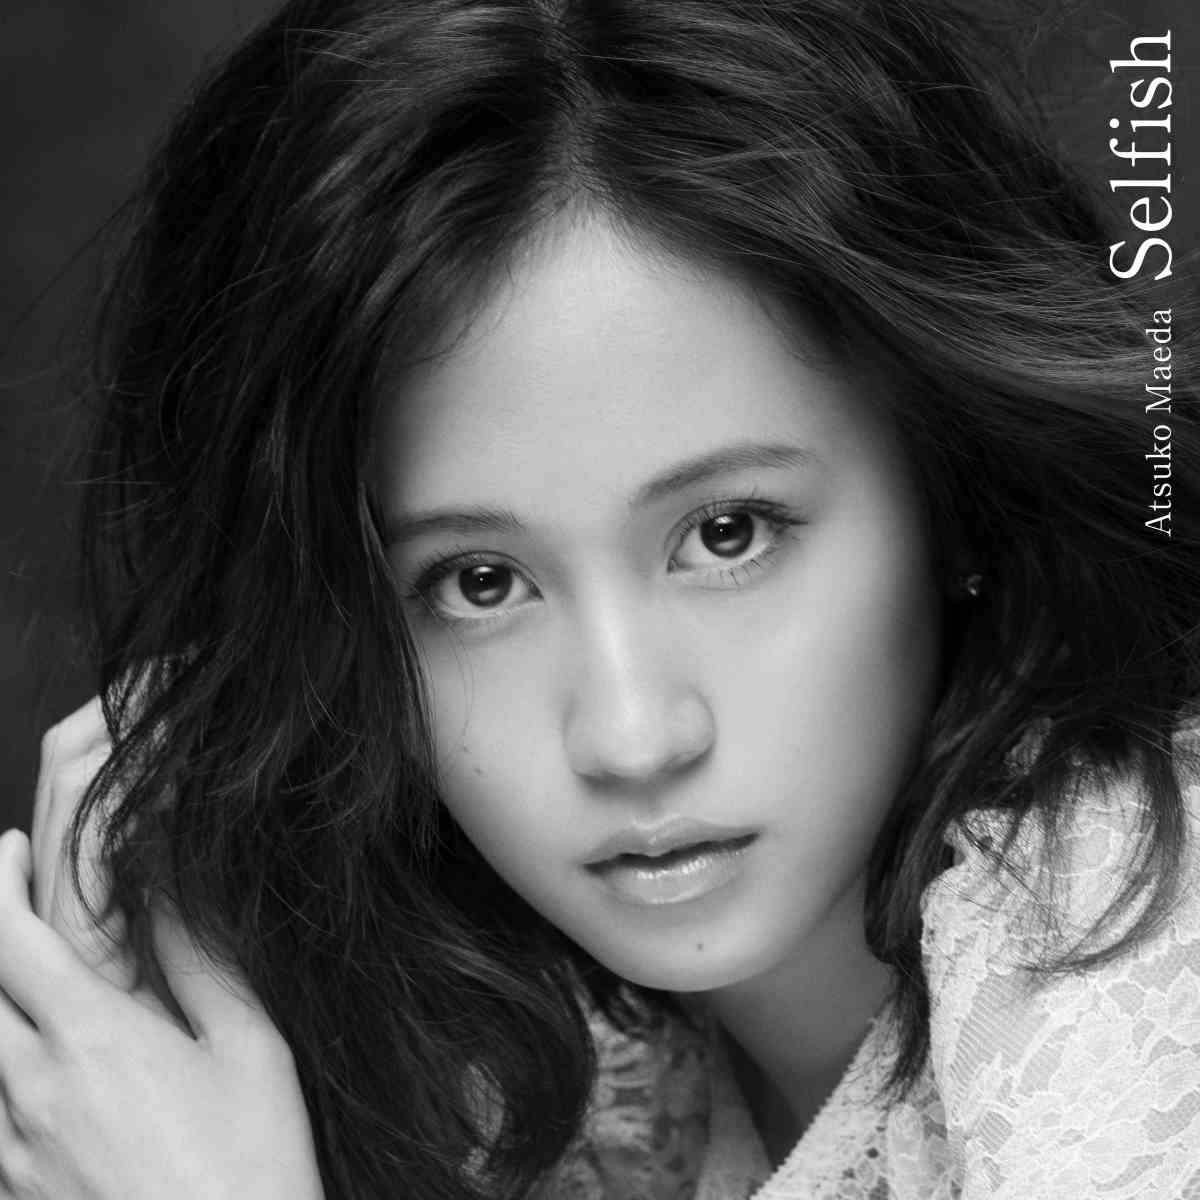 review-of-the-album-selfish-the-debut-solo-album-by-pop-singer-atsuko-maeda